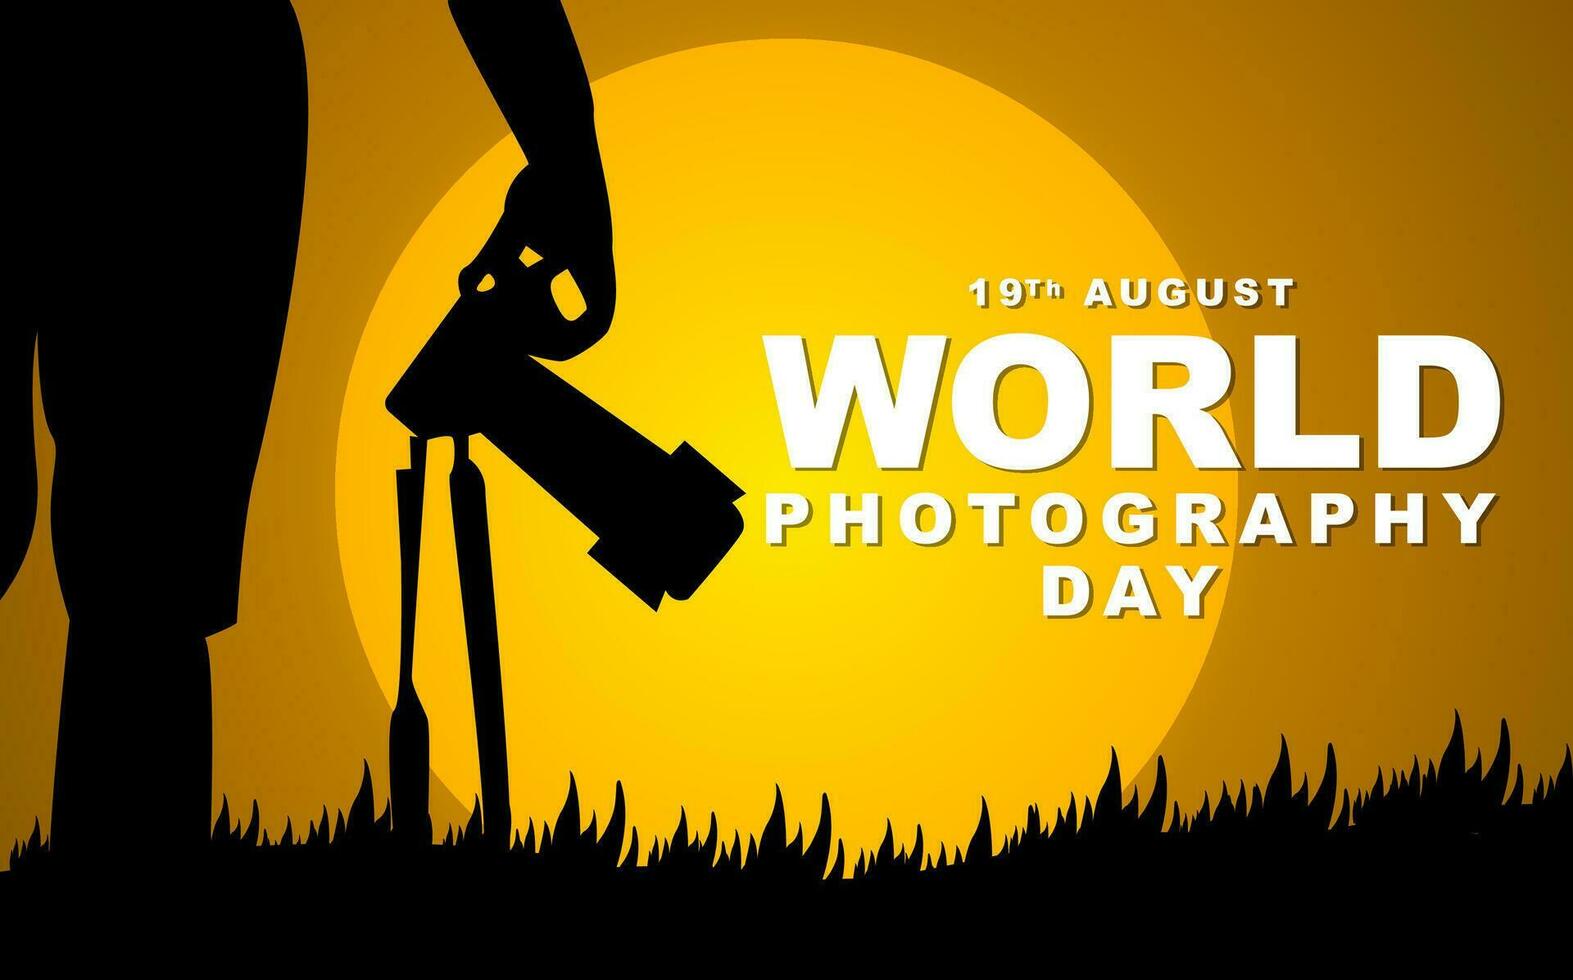 Welt Fotografie Tag auf August 19., Fotograf Silhouette Illustration Design. vektor